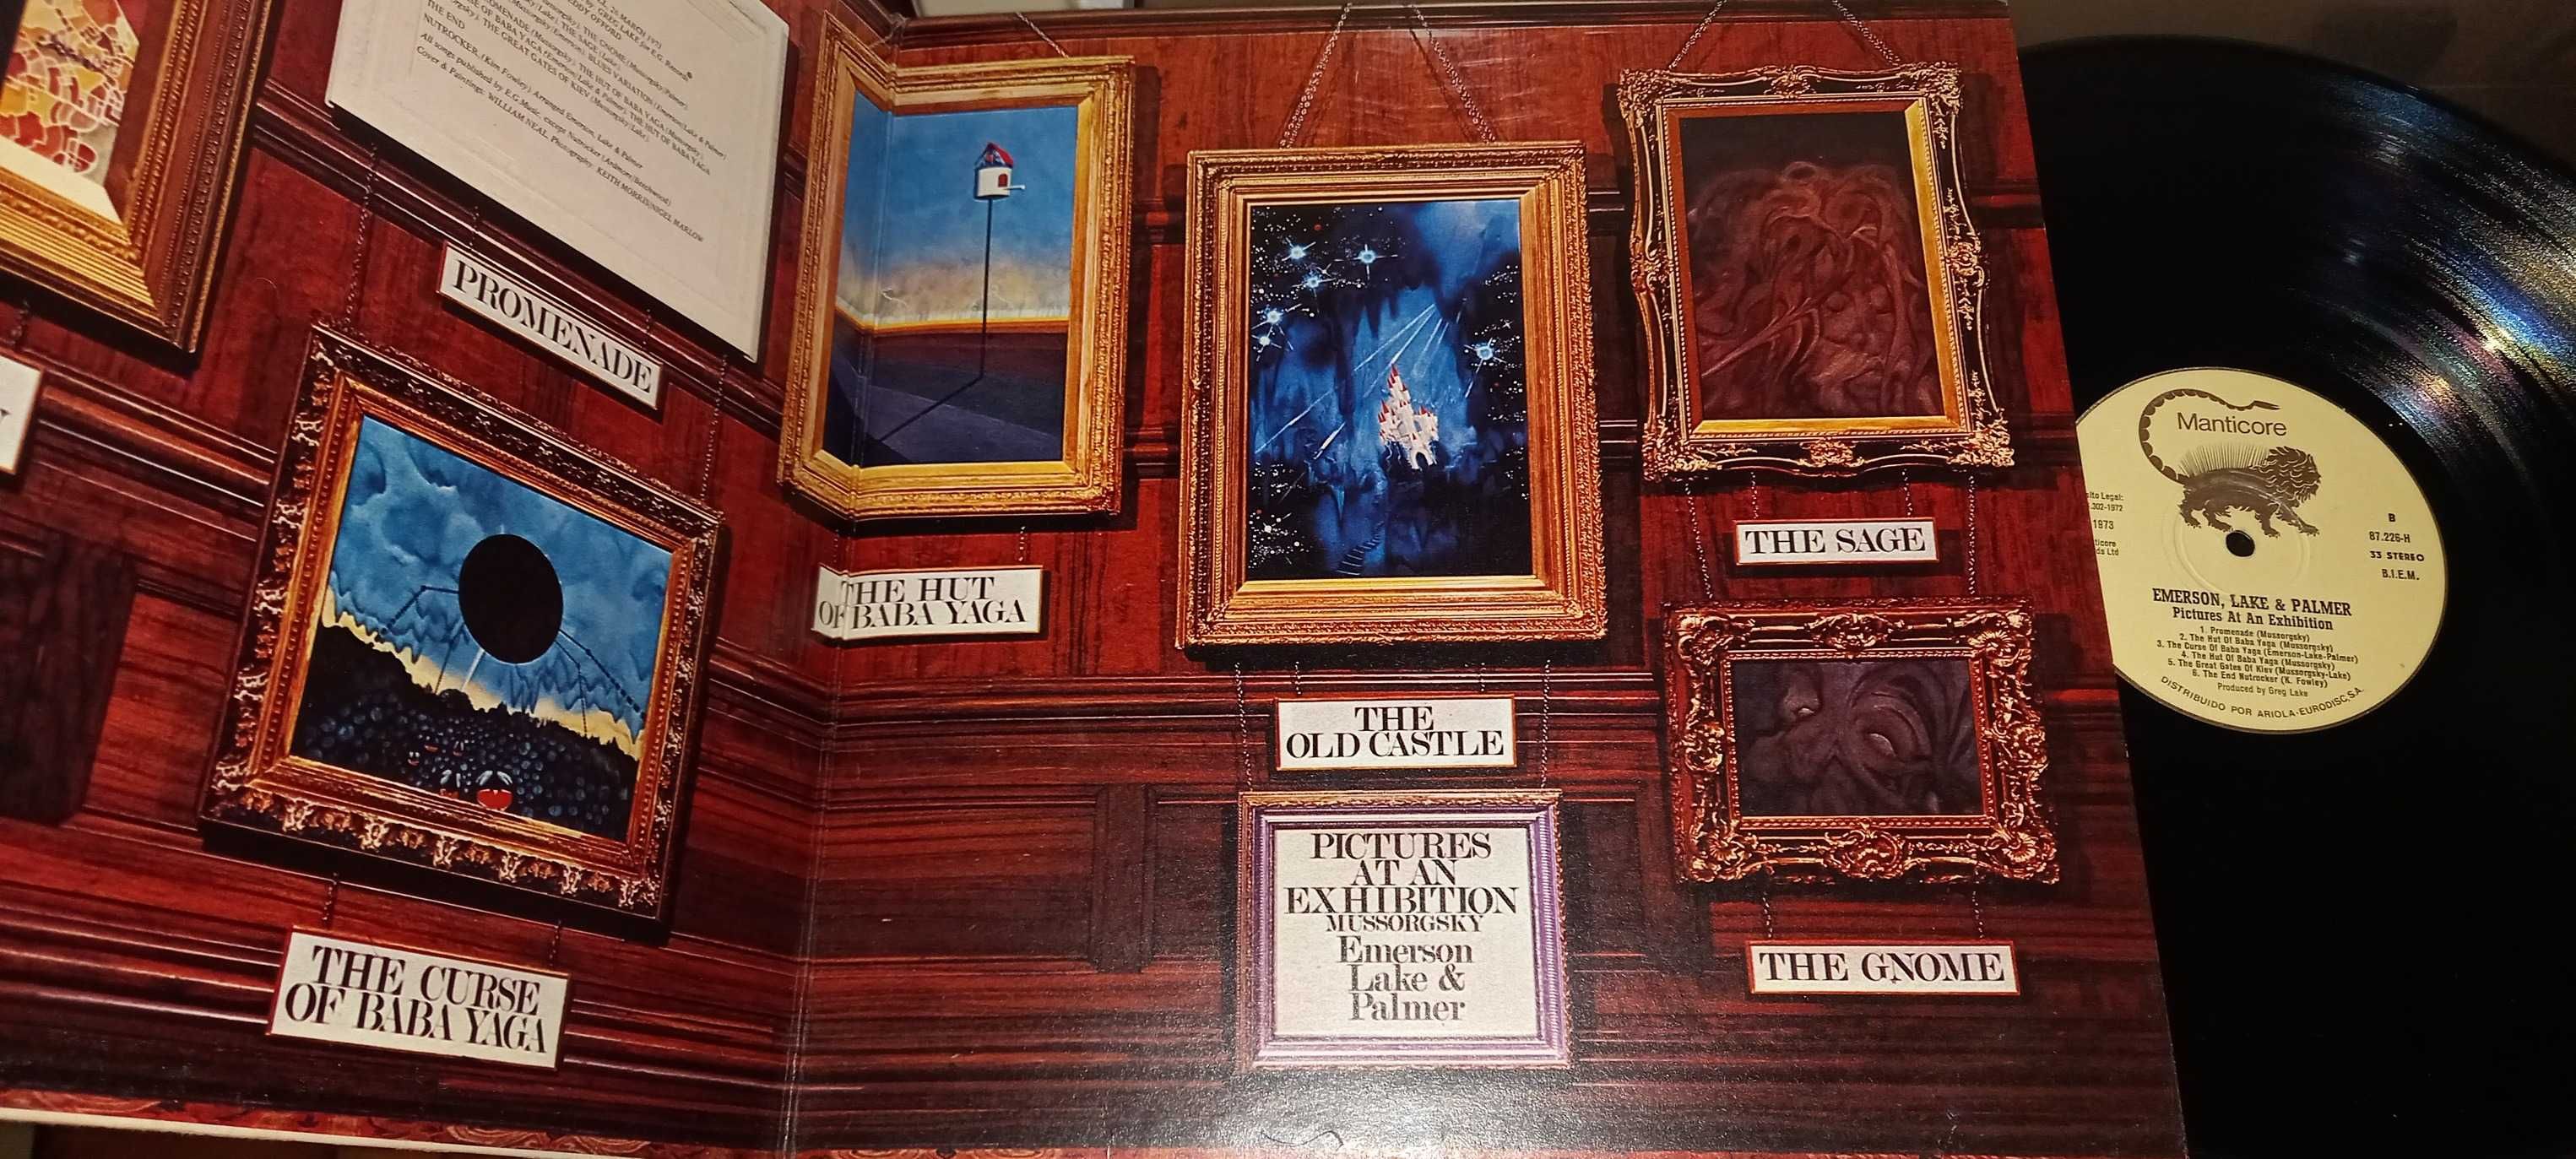 Emerson, Lake & Palmer - Pictures At An Exibition LP - 1973 - Gatefold